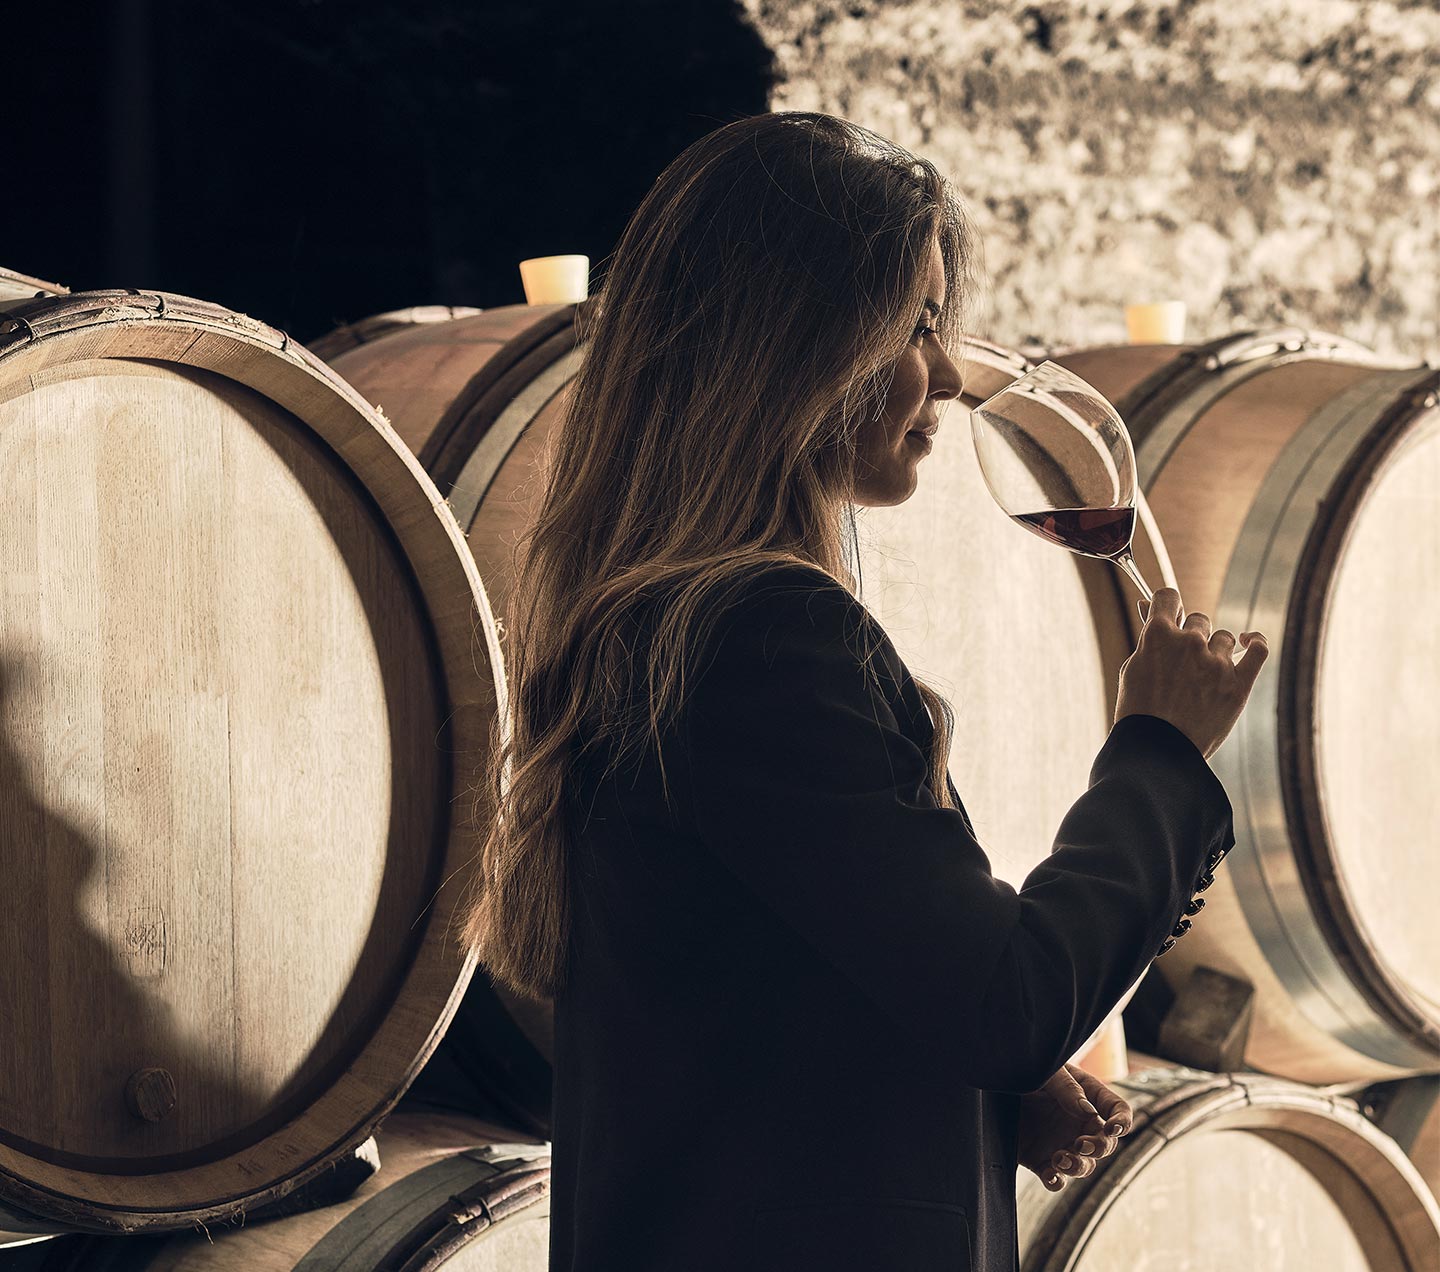 Mia breathes new life into the wines of Domaine MIA